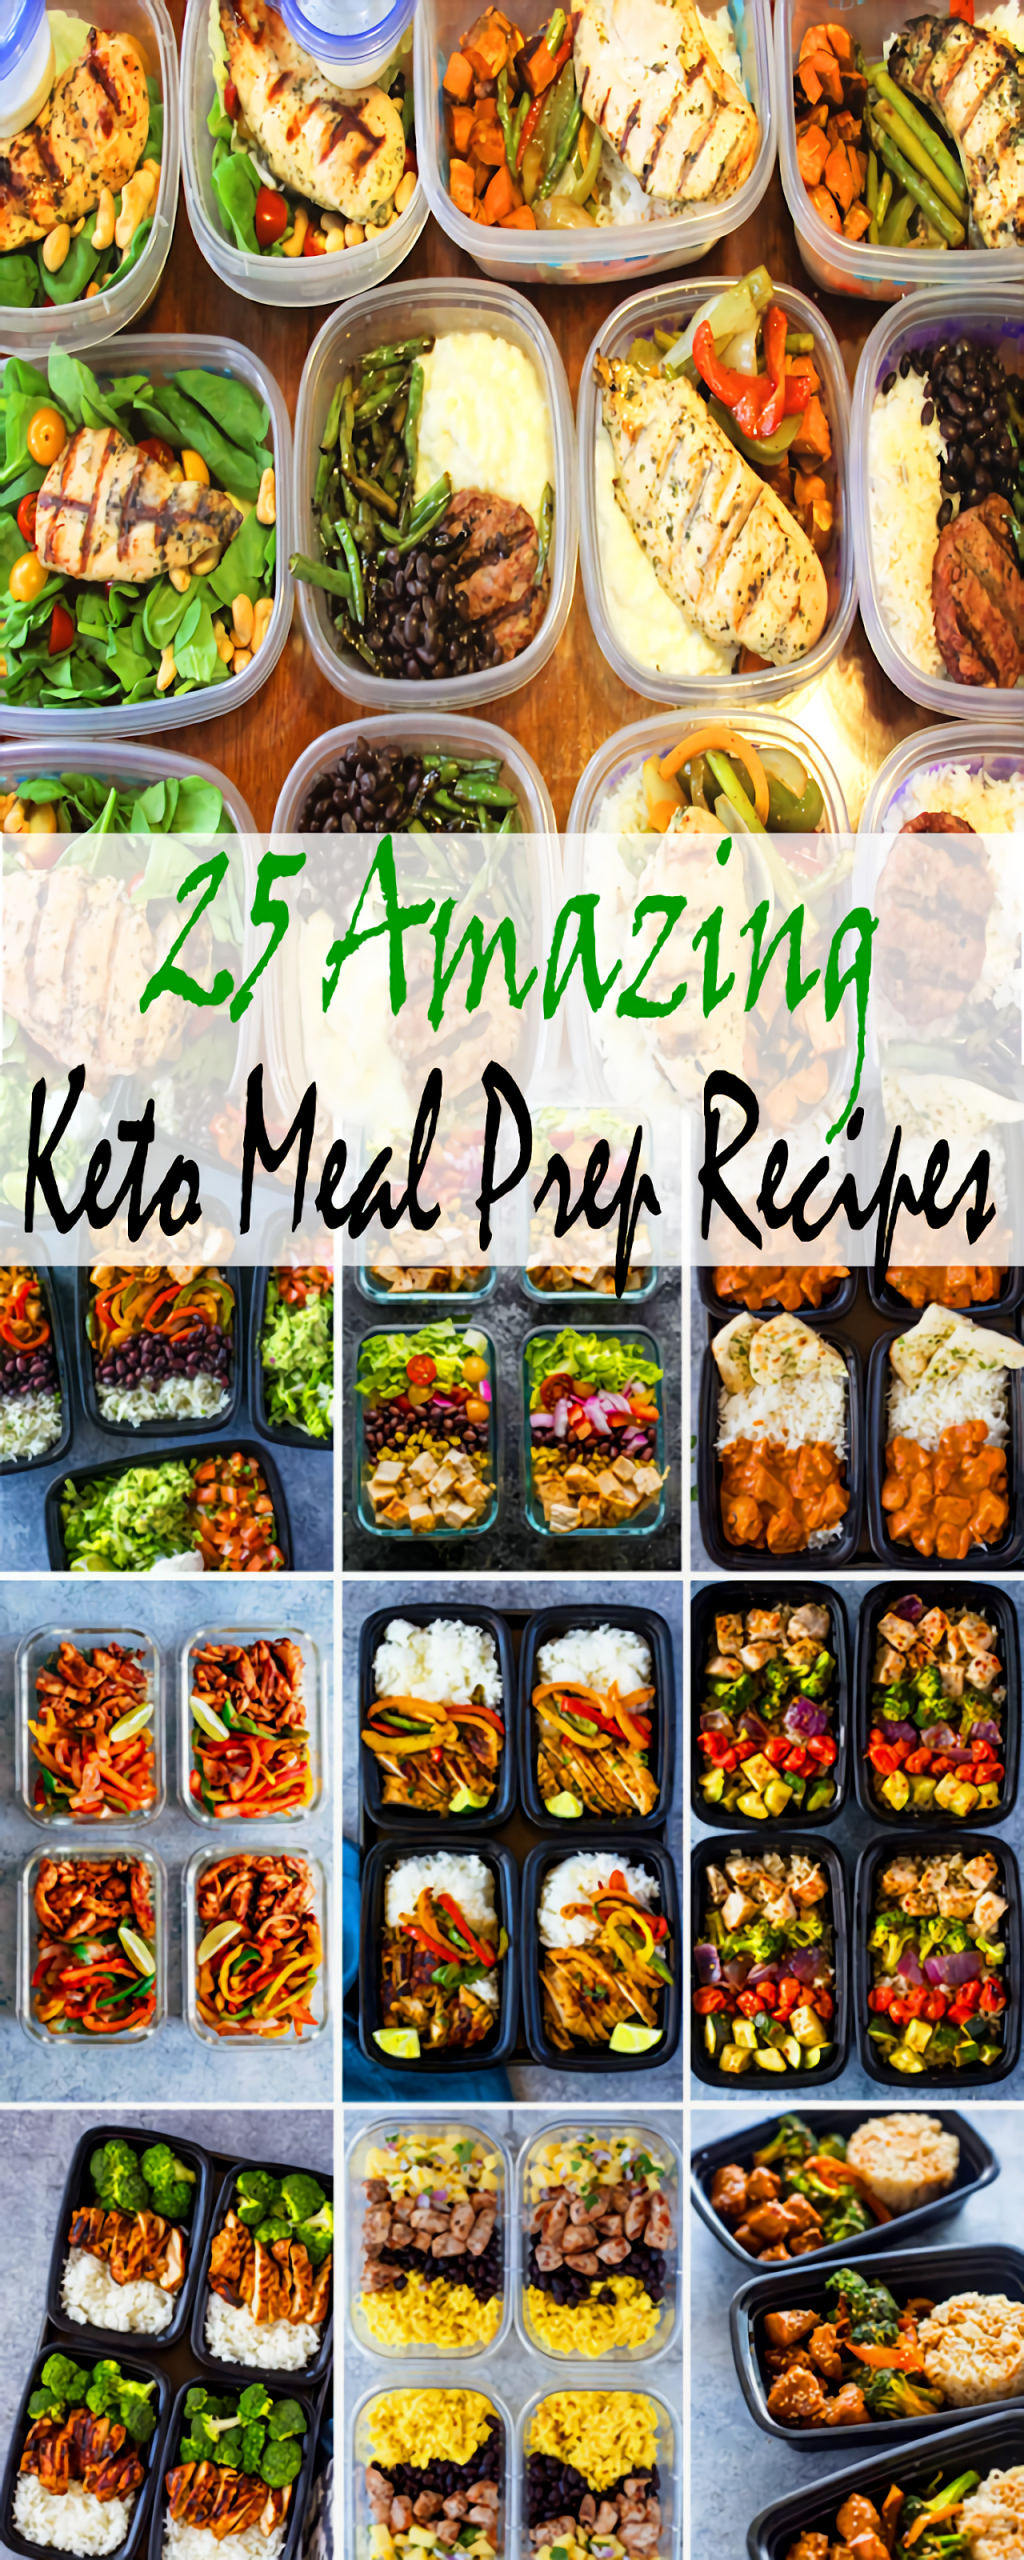 Vegan Keto Meal Prep
 25 Amazing Keto Meal Prep Recipes Keto Mealprep